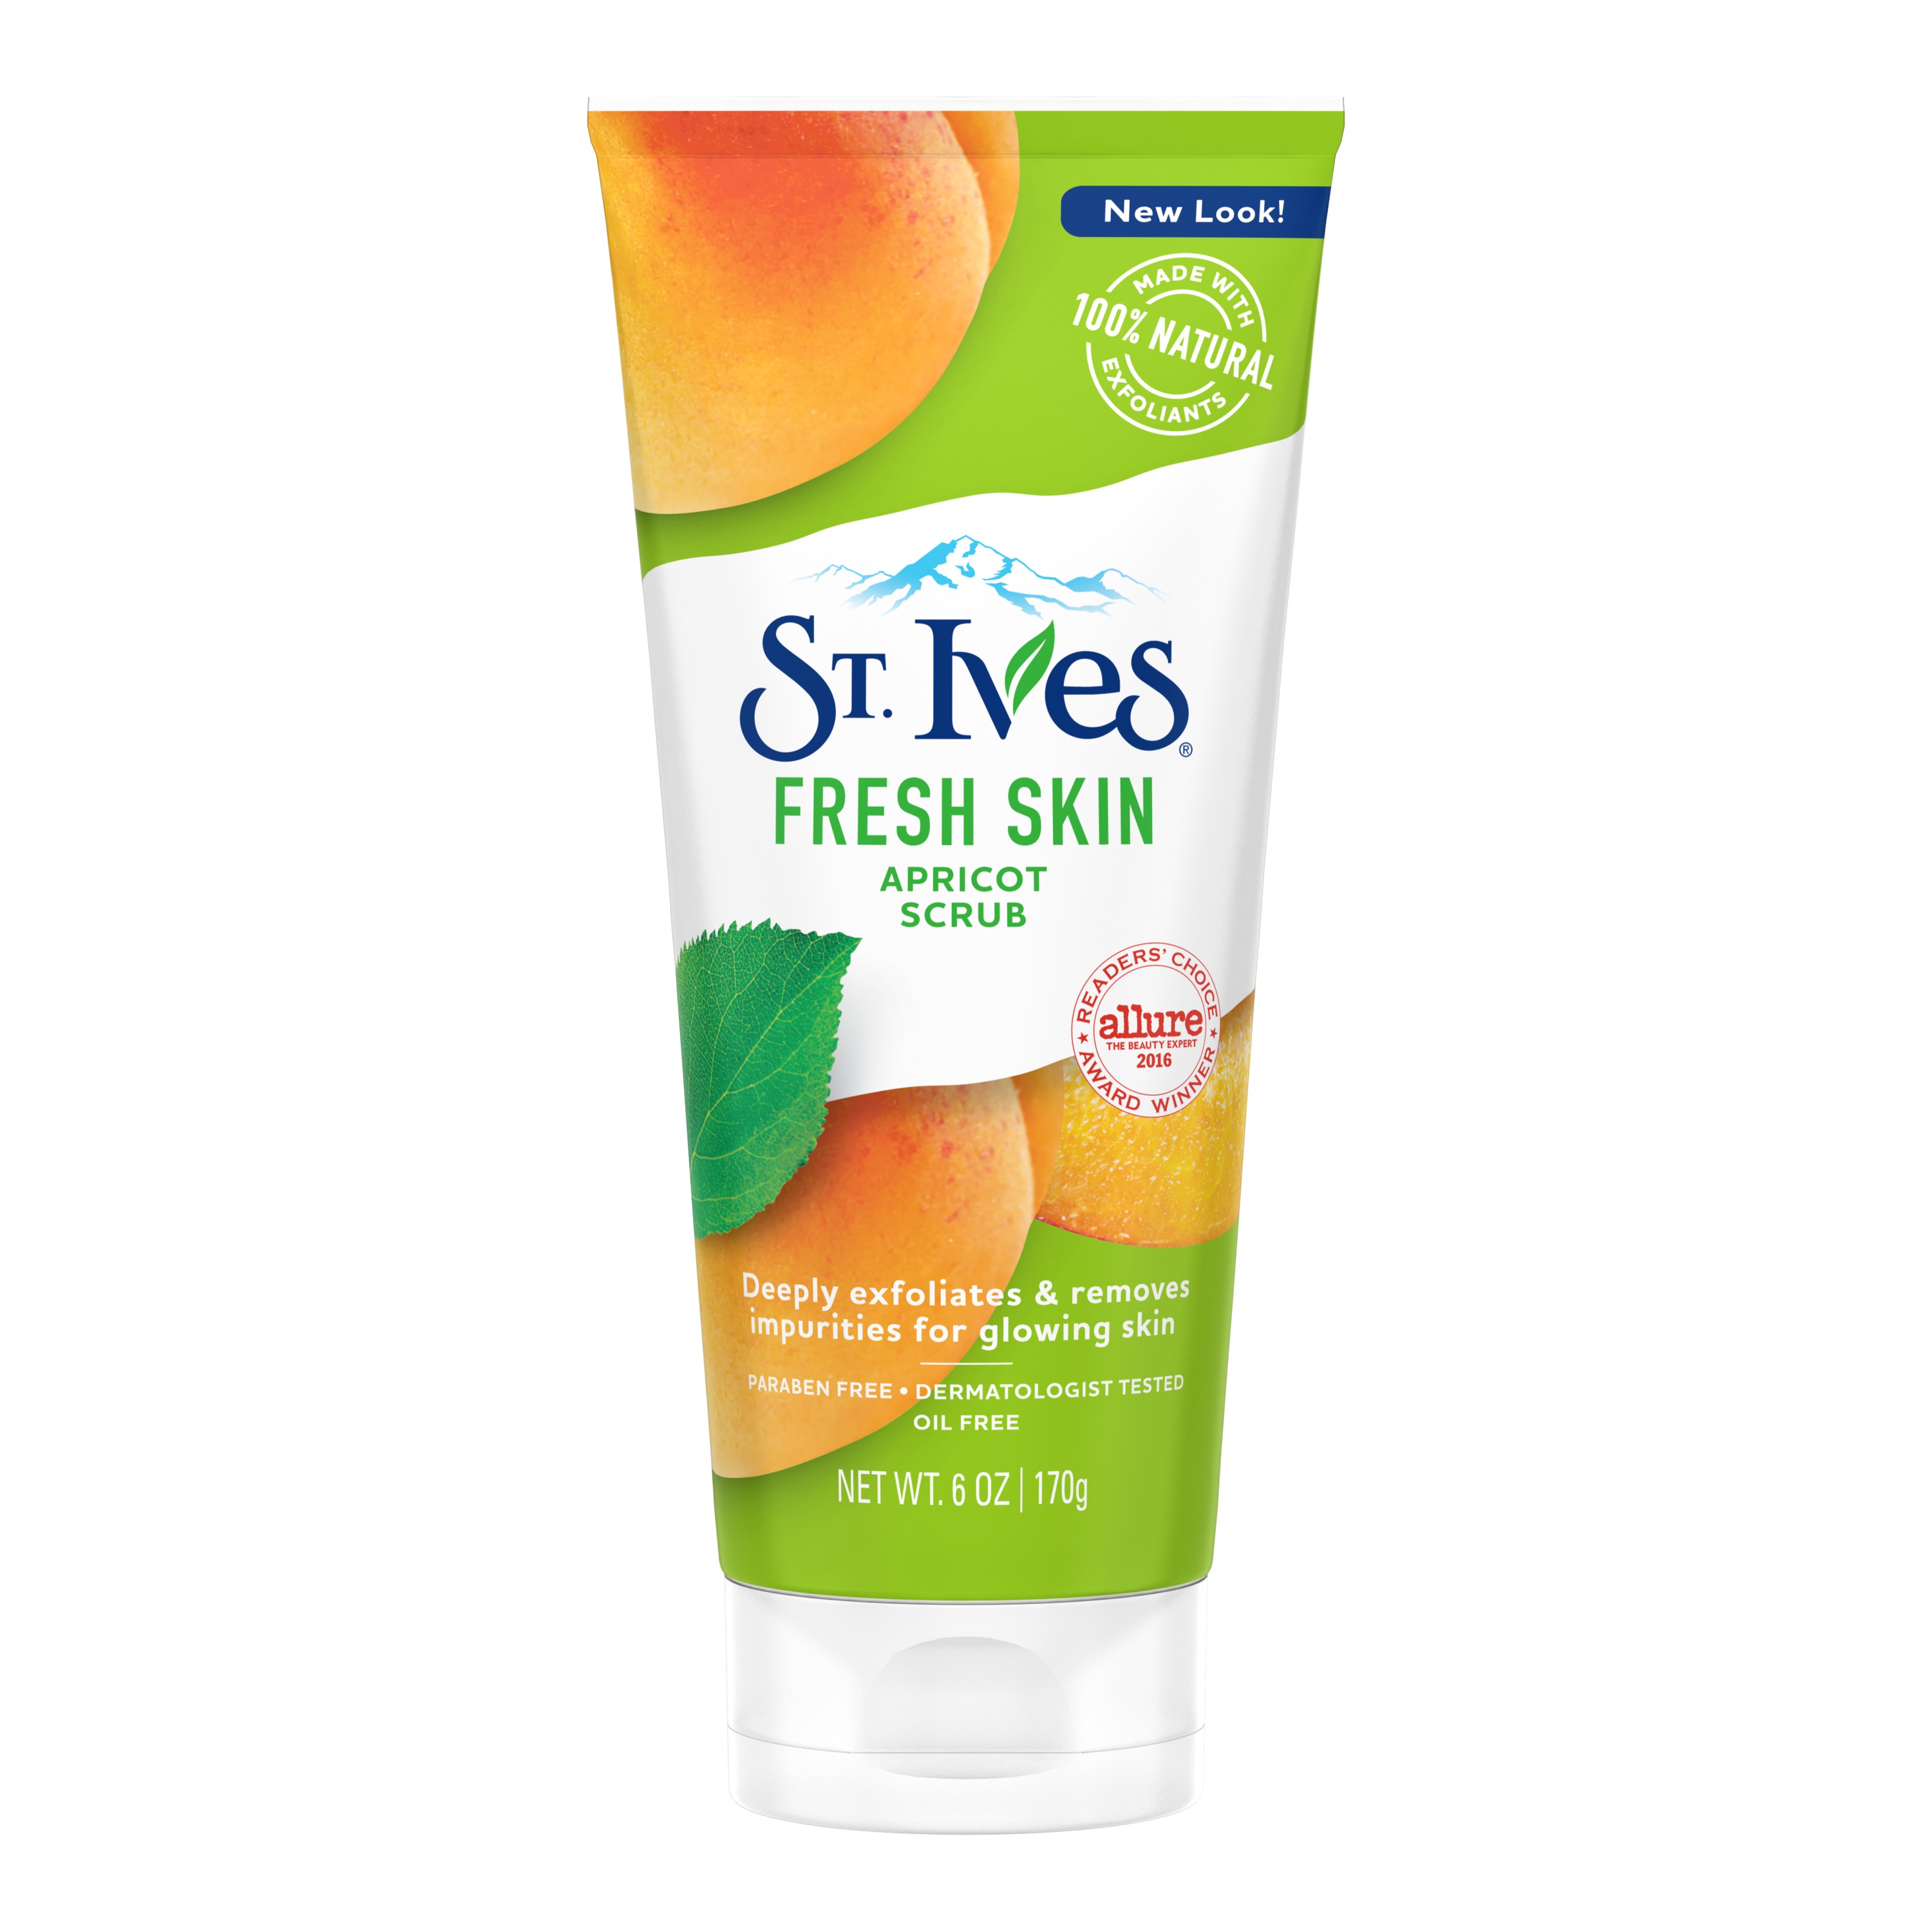 St. Ives Fresh Skin Face Scrub Apricot 6 oz - image 1 of 12